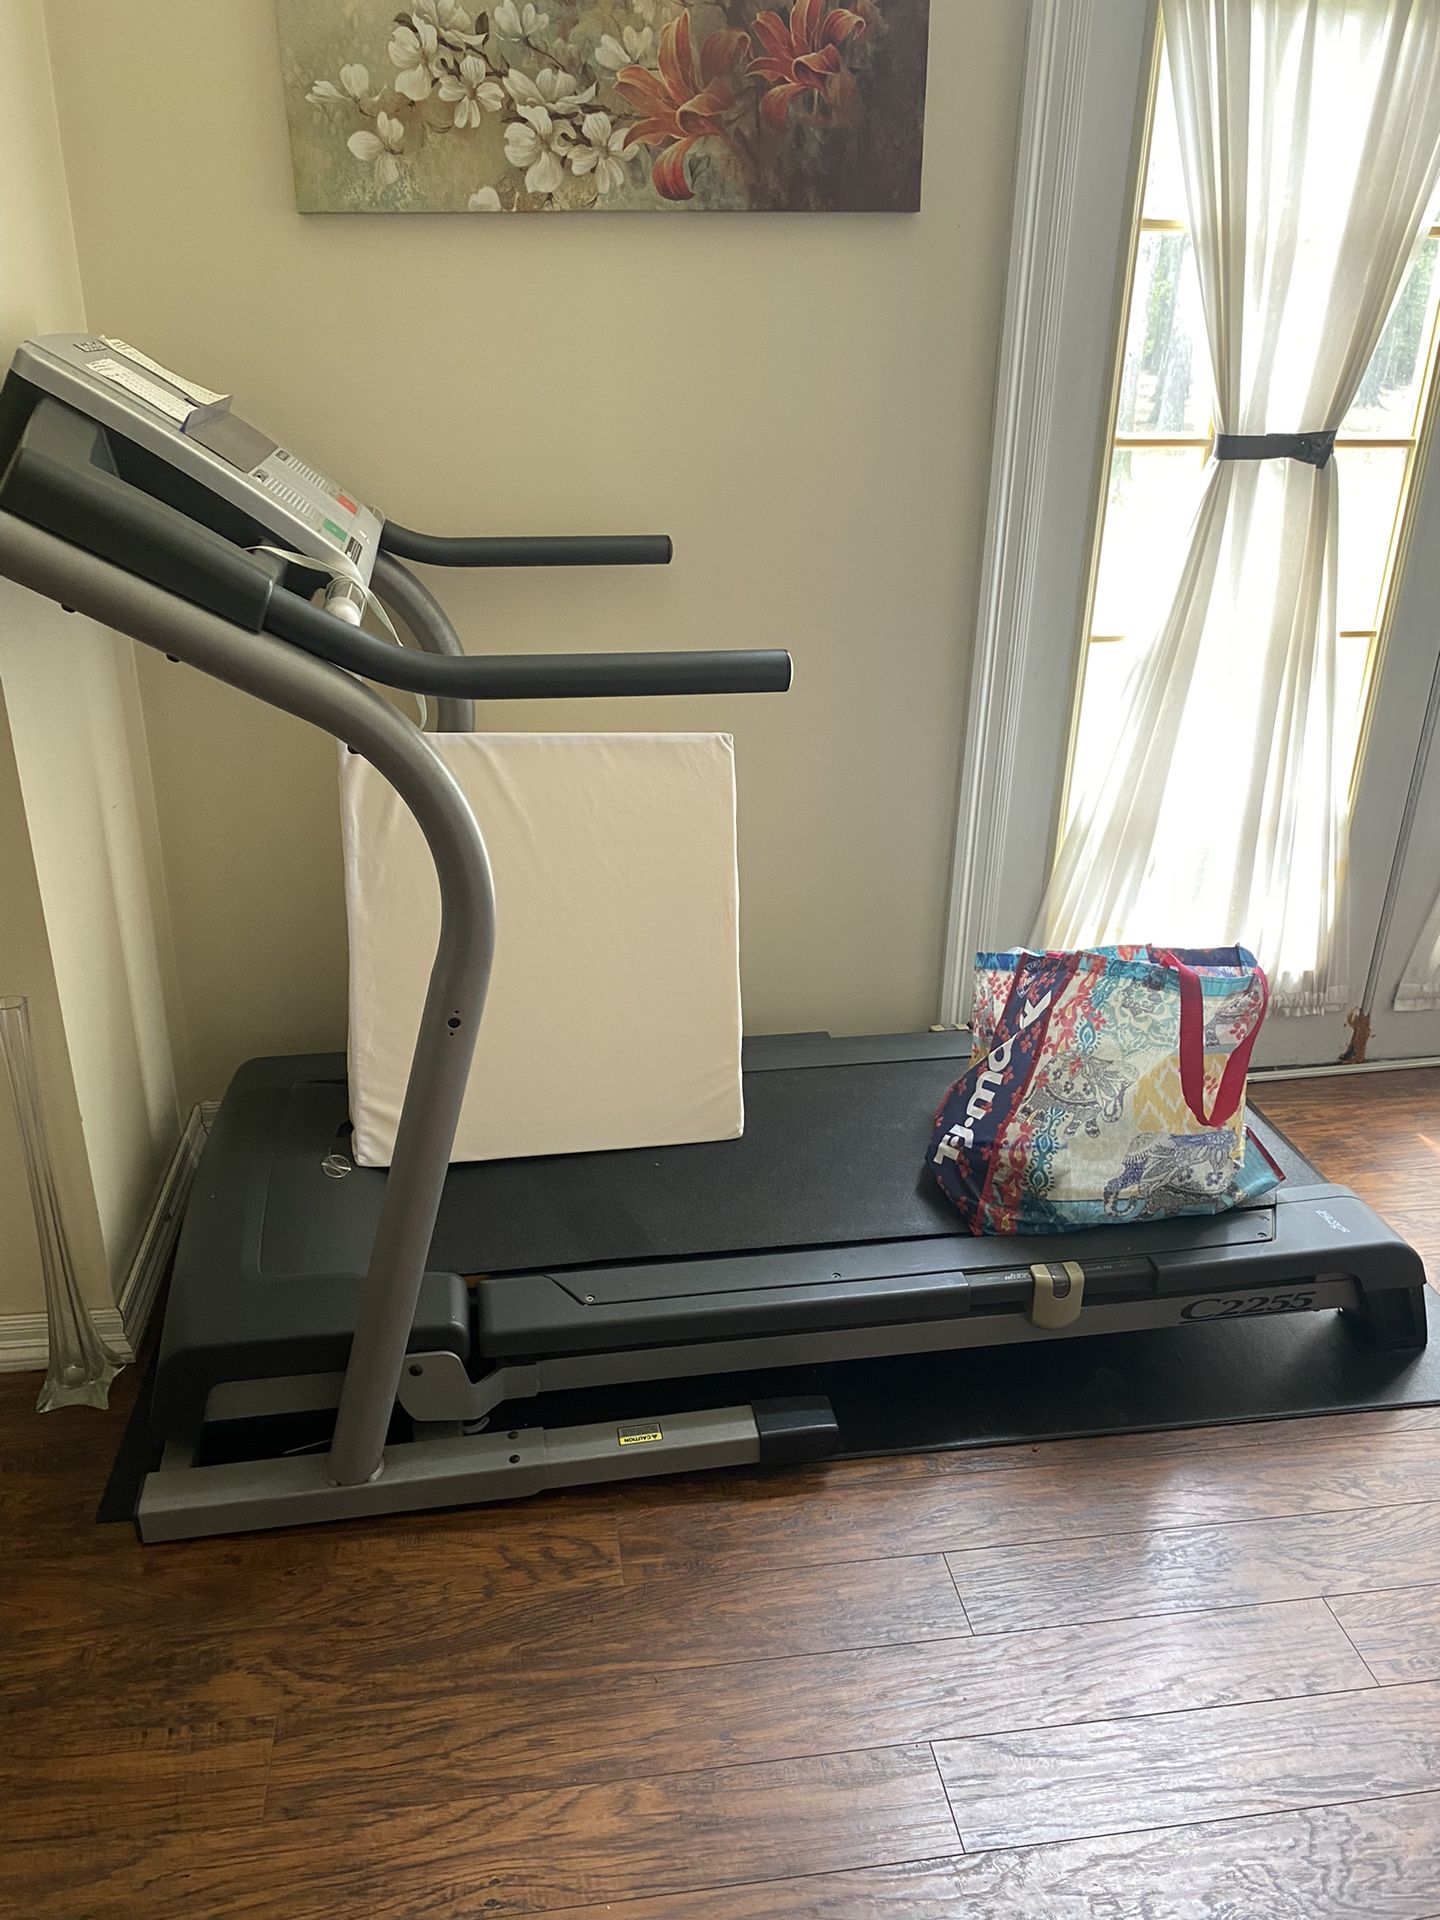 Treadmill And Elliptical 